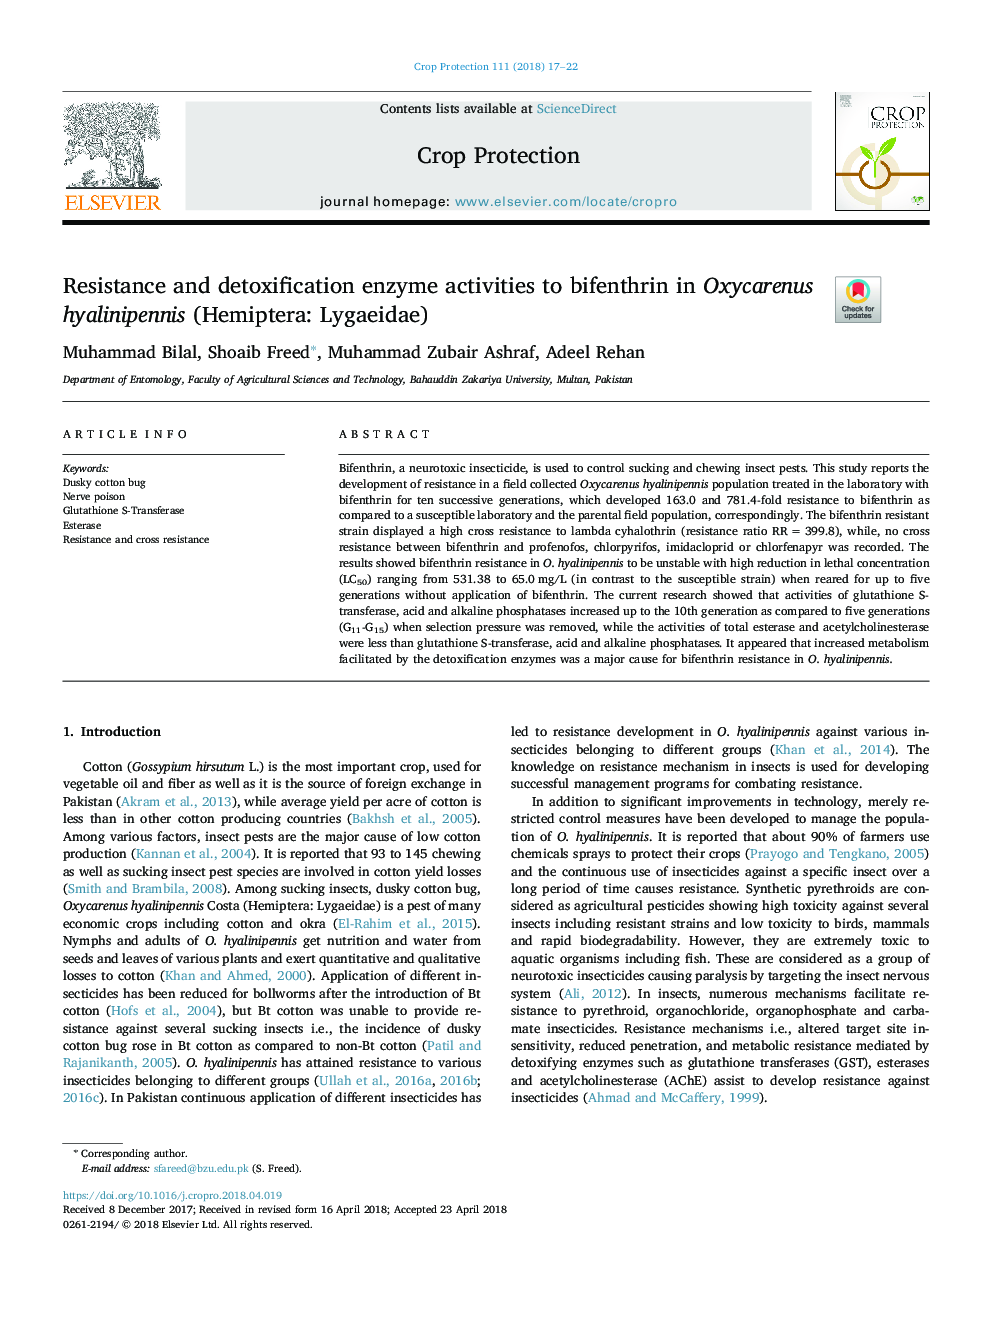 Resistance and detoxification enzyme activities to bifenthrin in Oxycarenus hyalinipennis (Hemiptera: Lygaeidae)